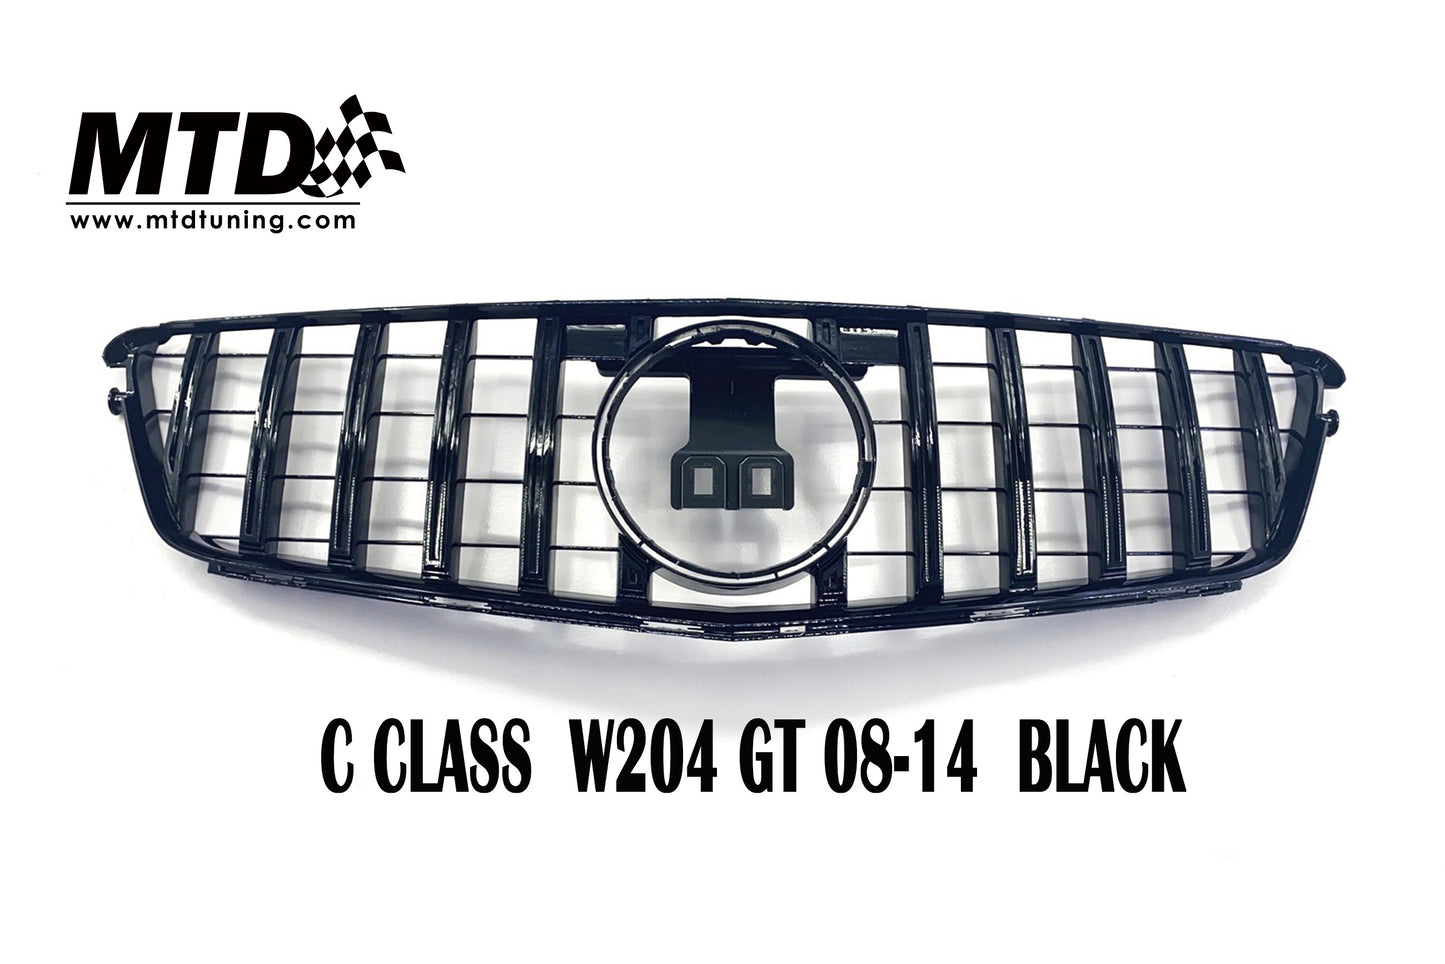 Mercedes-Benz C Class W204 Front Grille  GT 08-14 Black